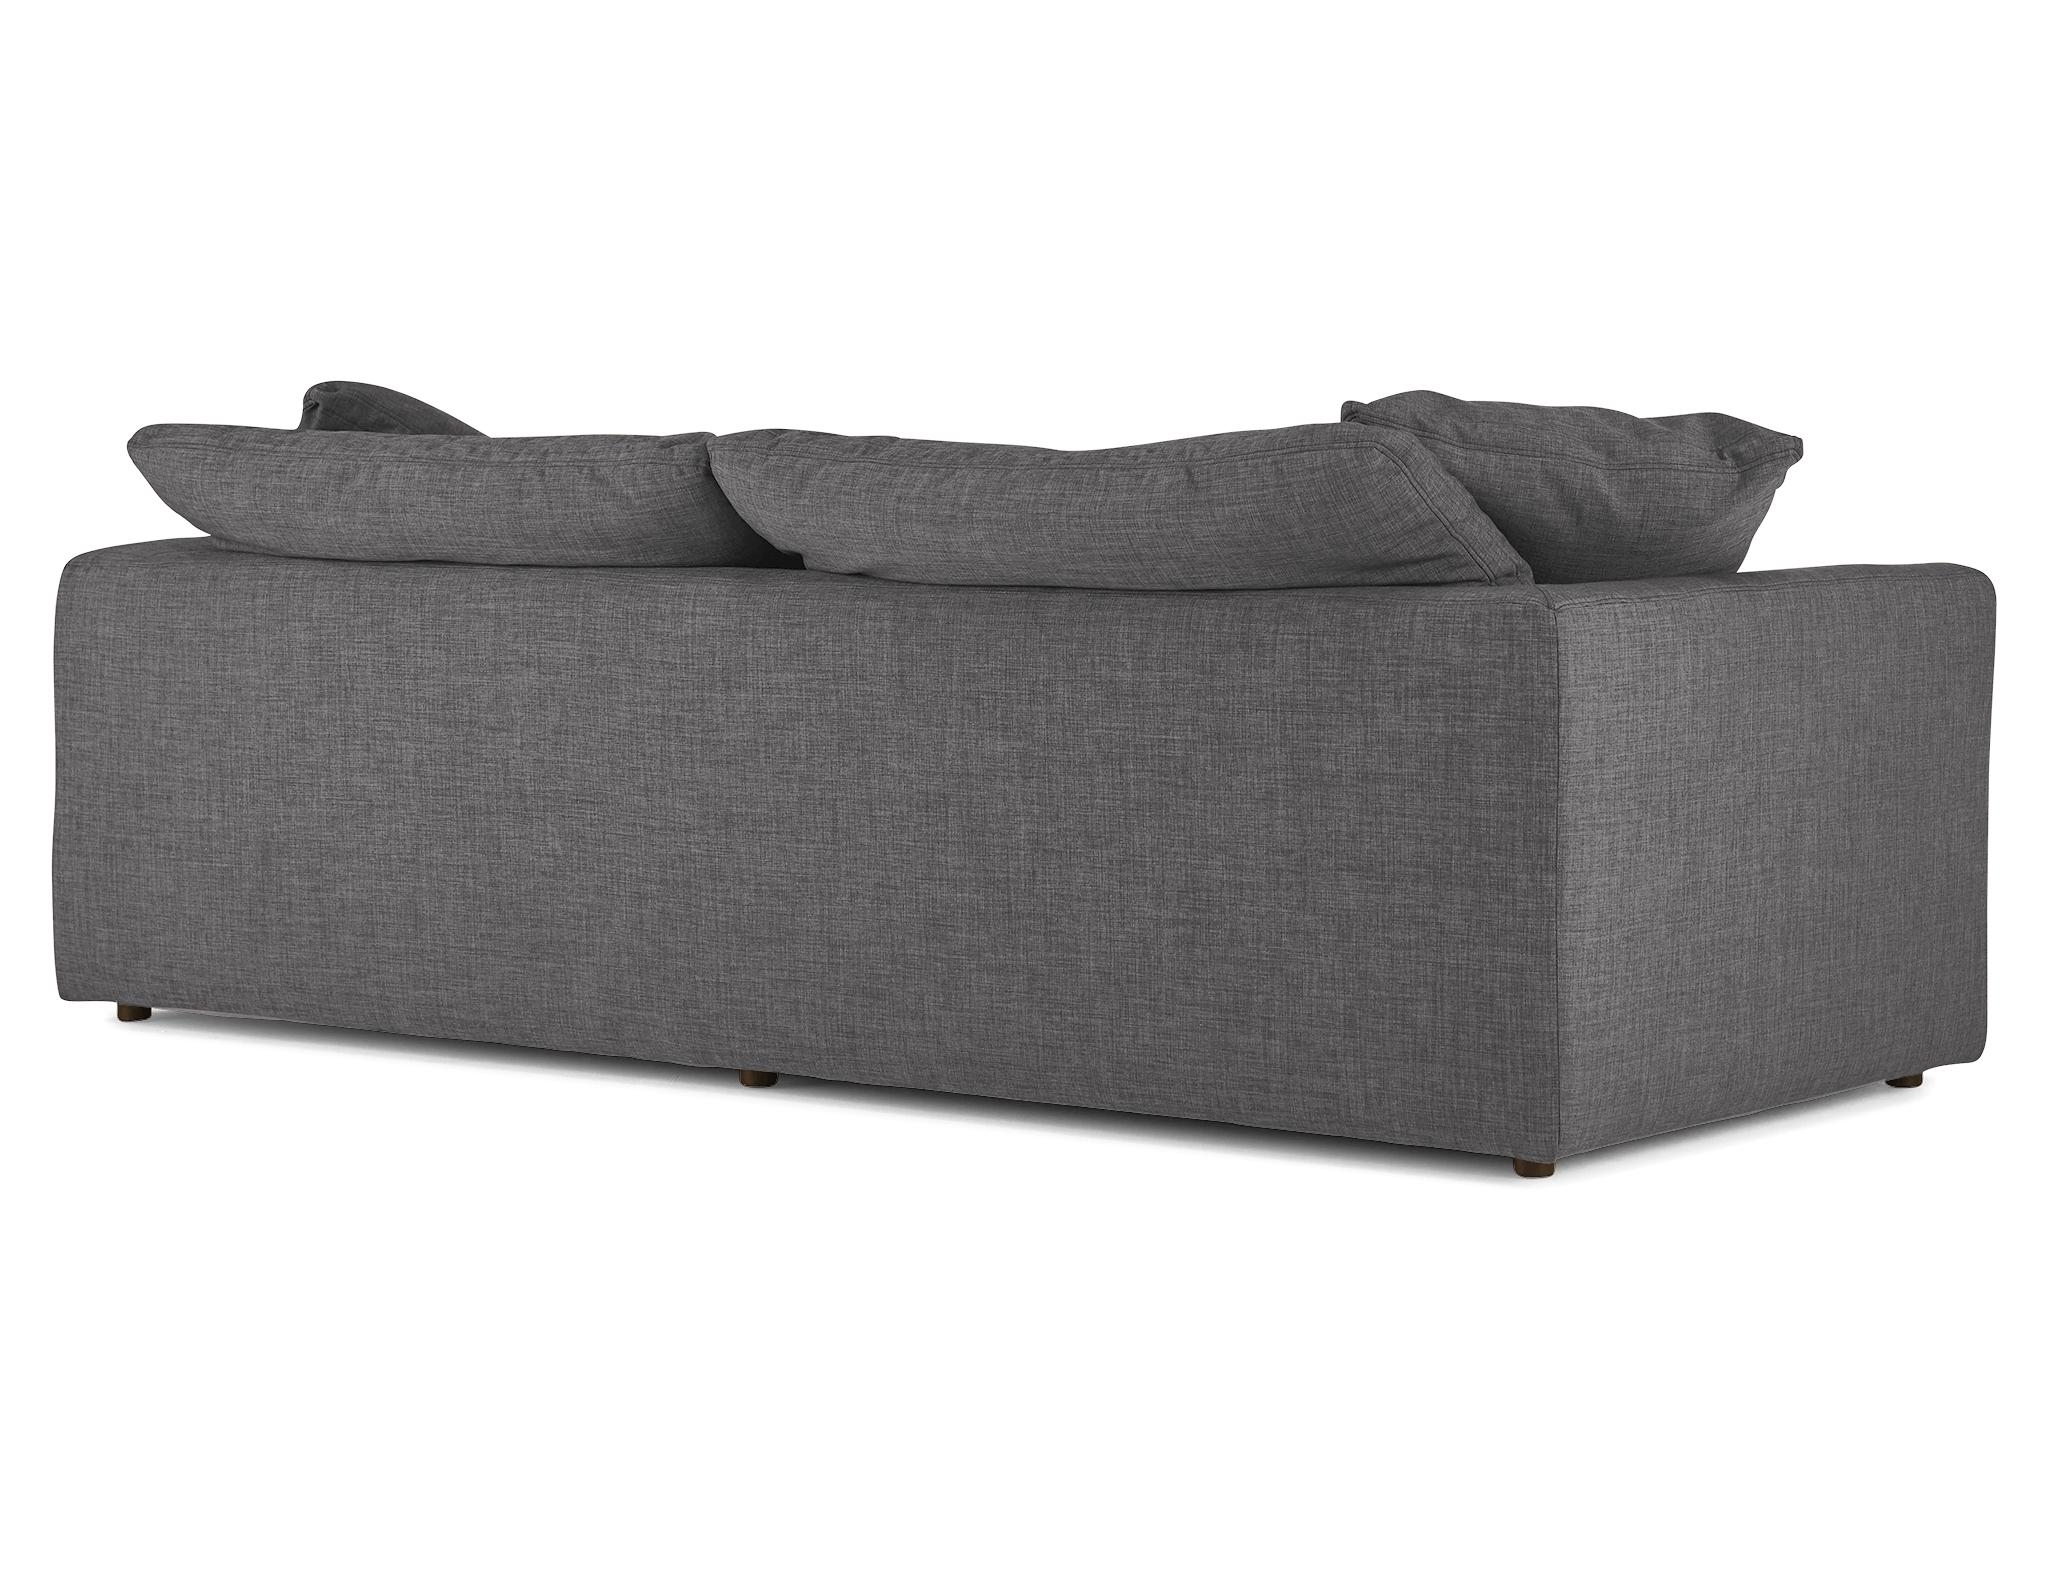 Gray Bryant Mid Century Modern Sofa - Royale Ash - Image 3